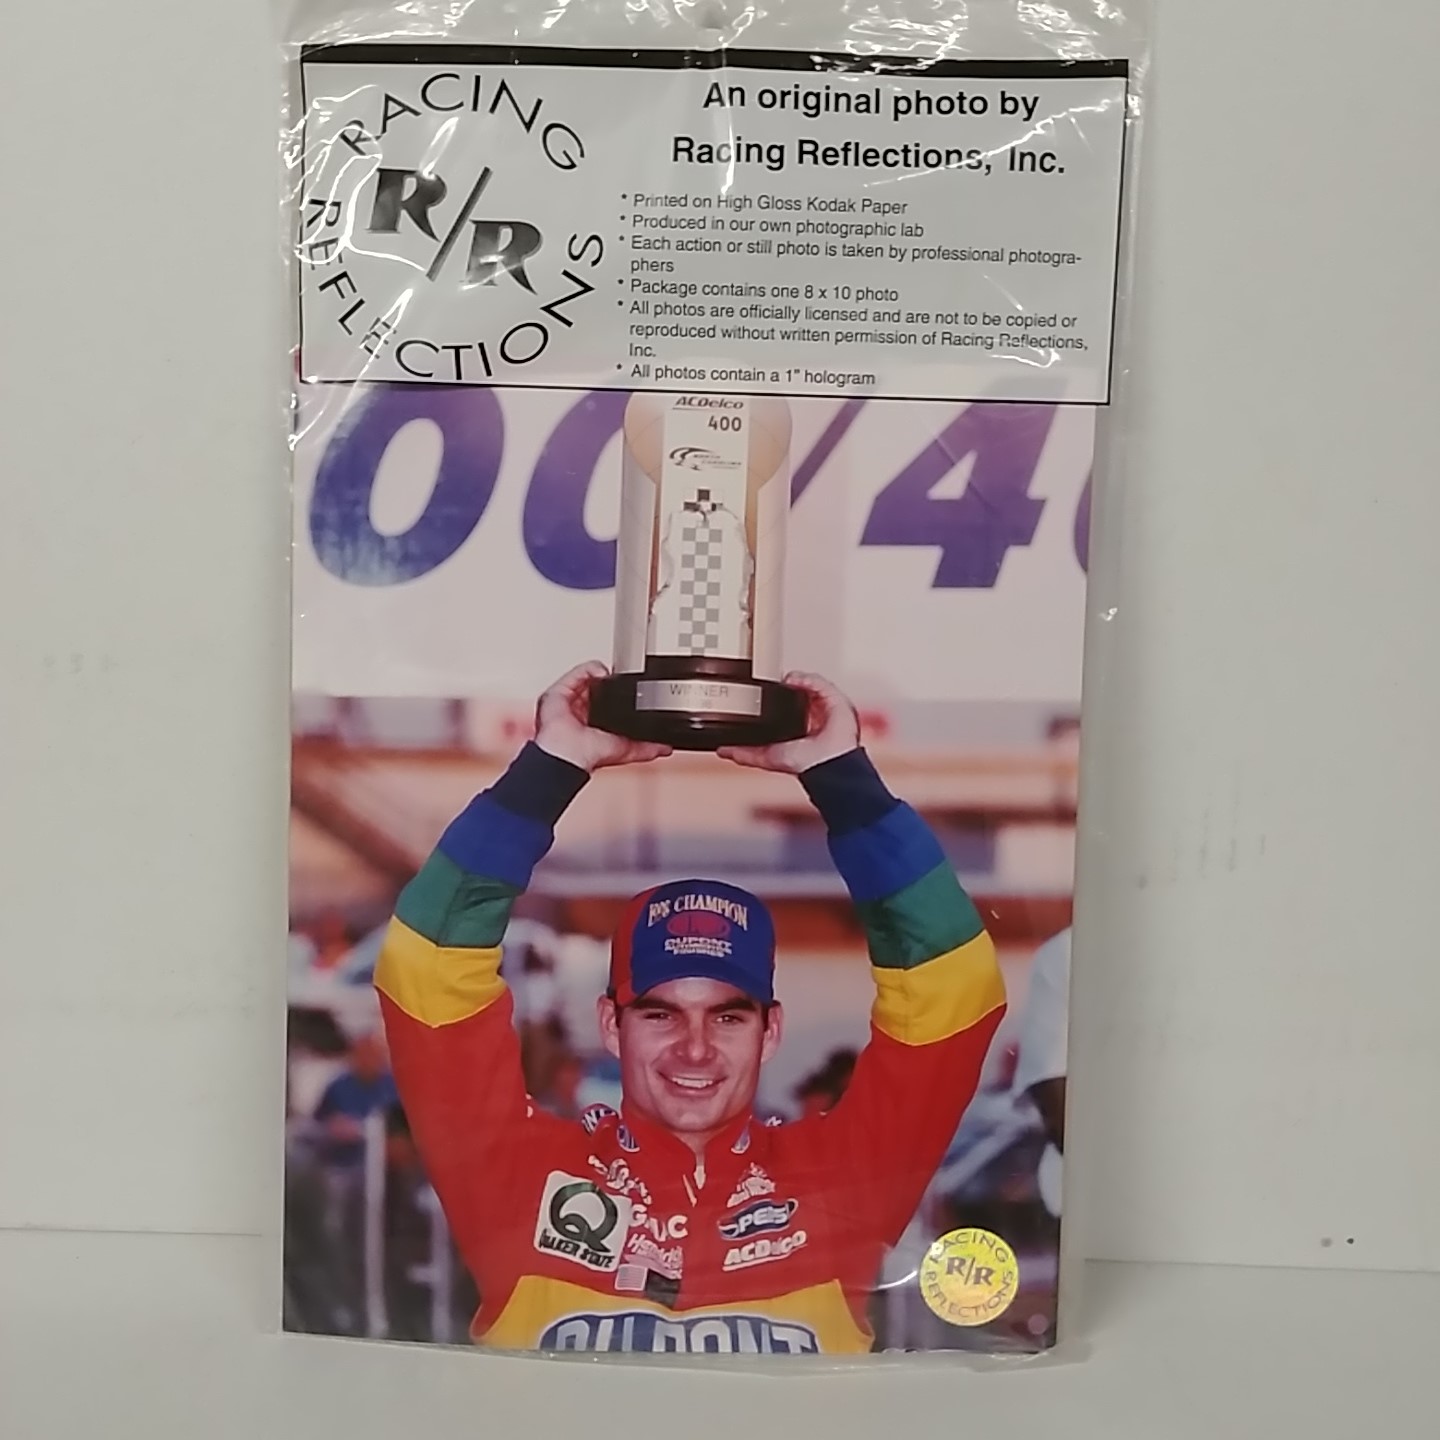 1998 Jeff Gordon Dupont "Winston Cup Champion" Racing Reflections photo